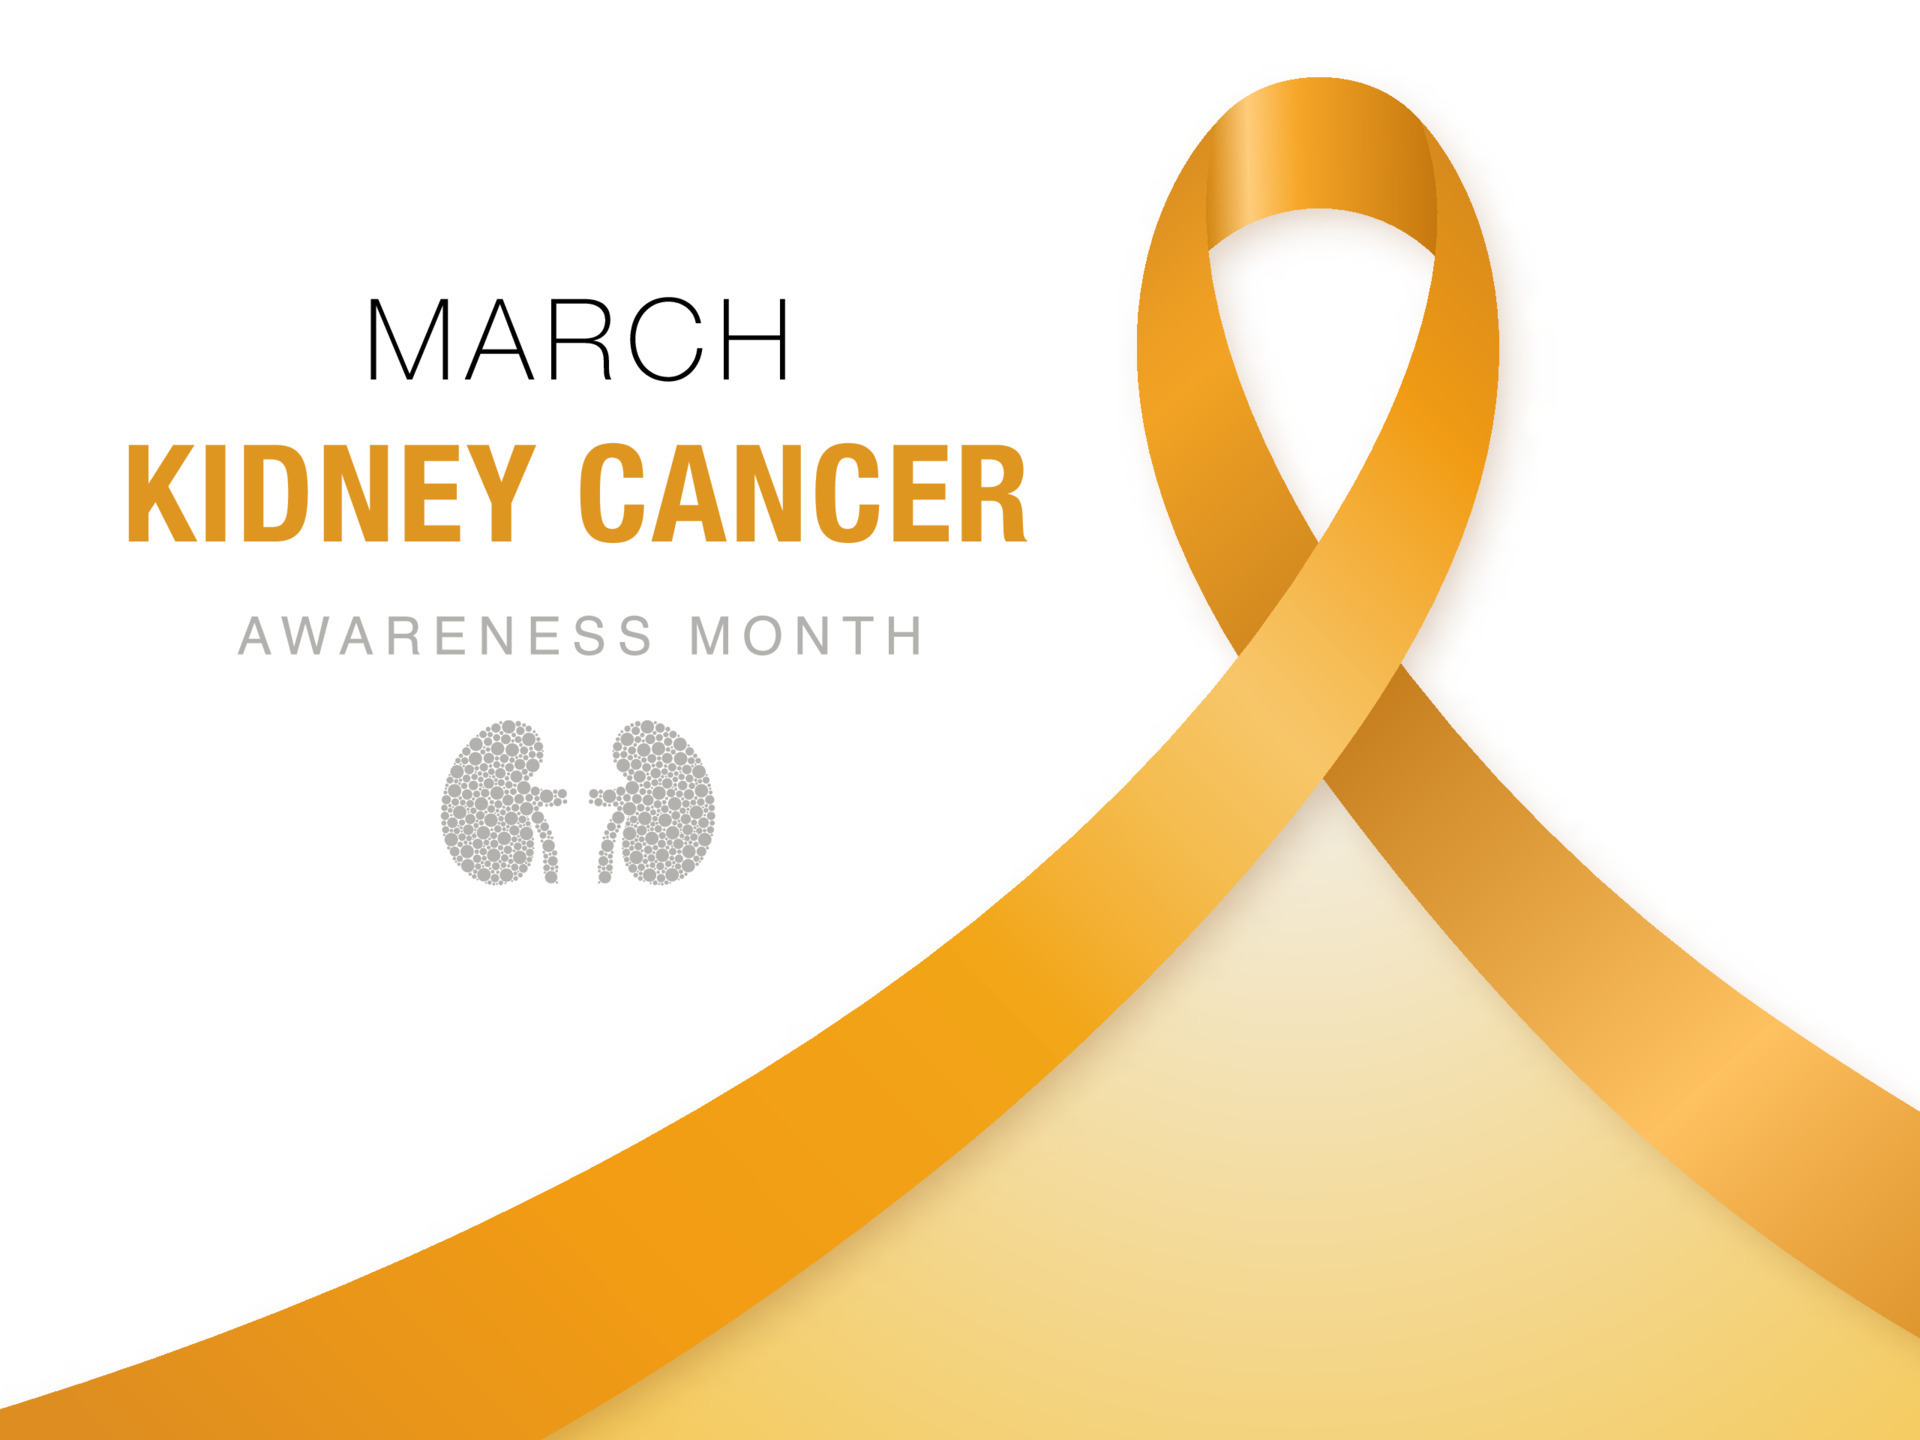 March Kidney Cancer Awareness Month. Orange color awareness ribbon on